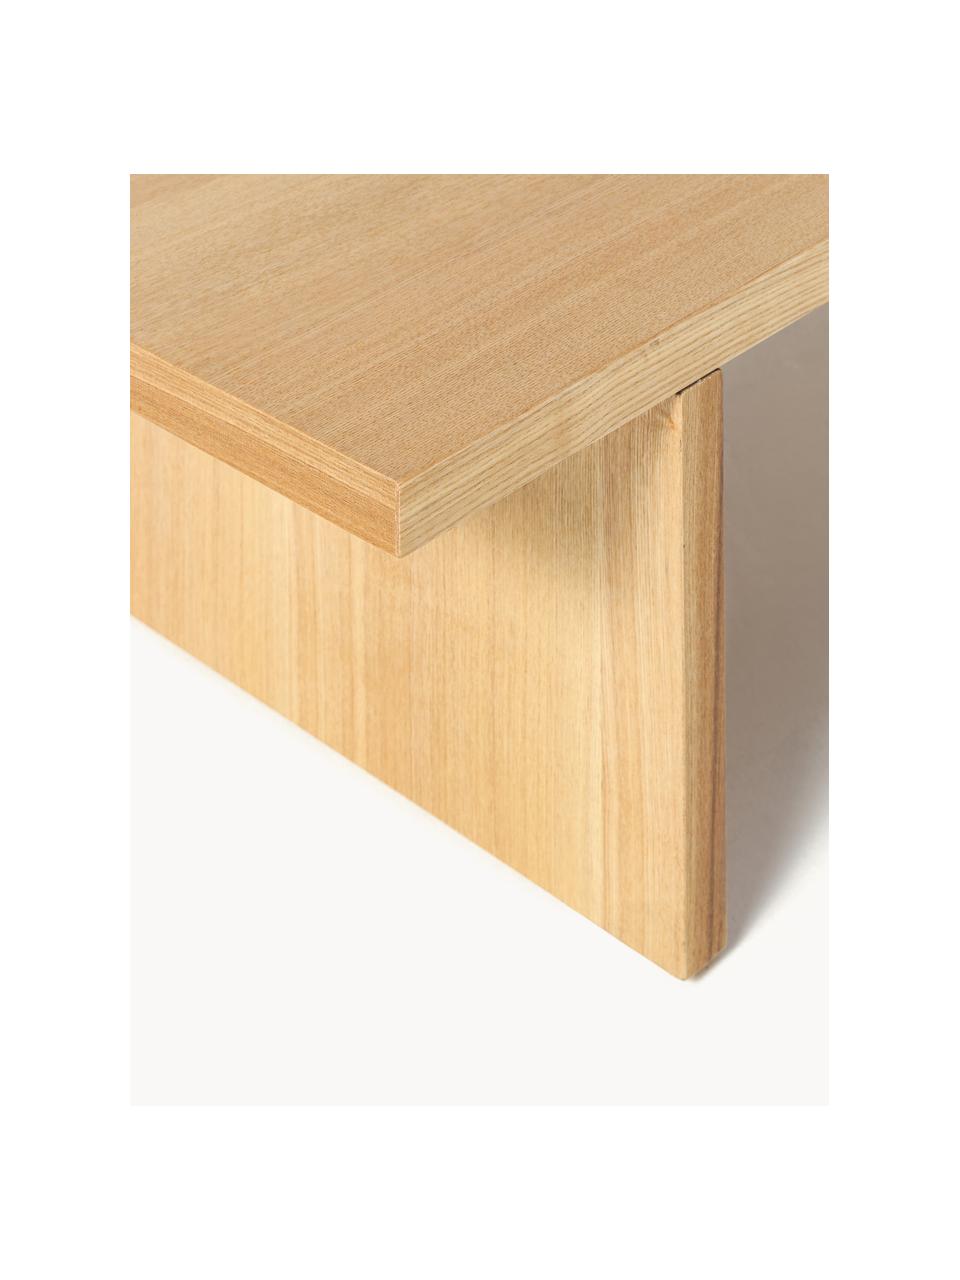 Nízky drevený konferenčný stolík Toni, MDF-doska strednej hustoty s jaseňovou dyhou, lakovaná, Jaseňové drevo, Š 120 x V 25 cm